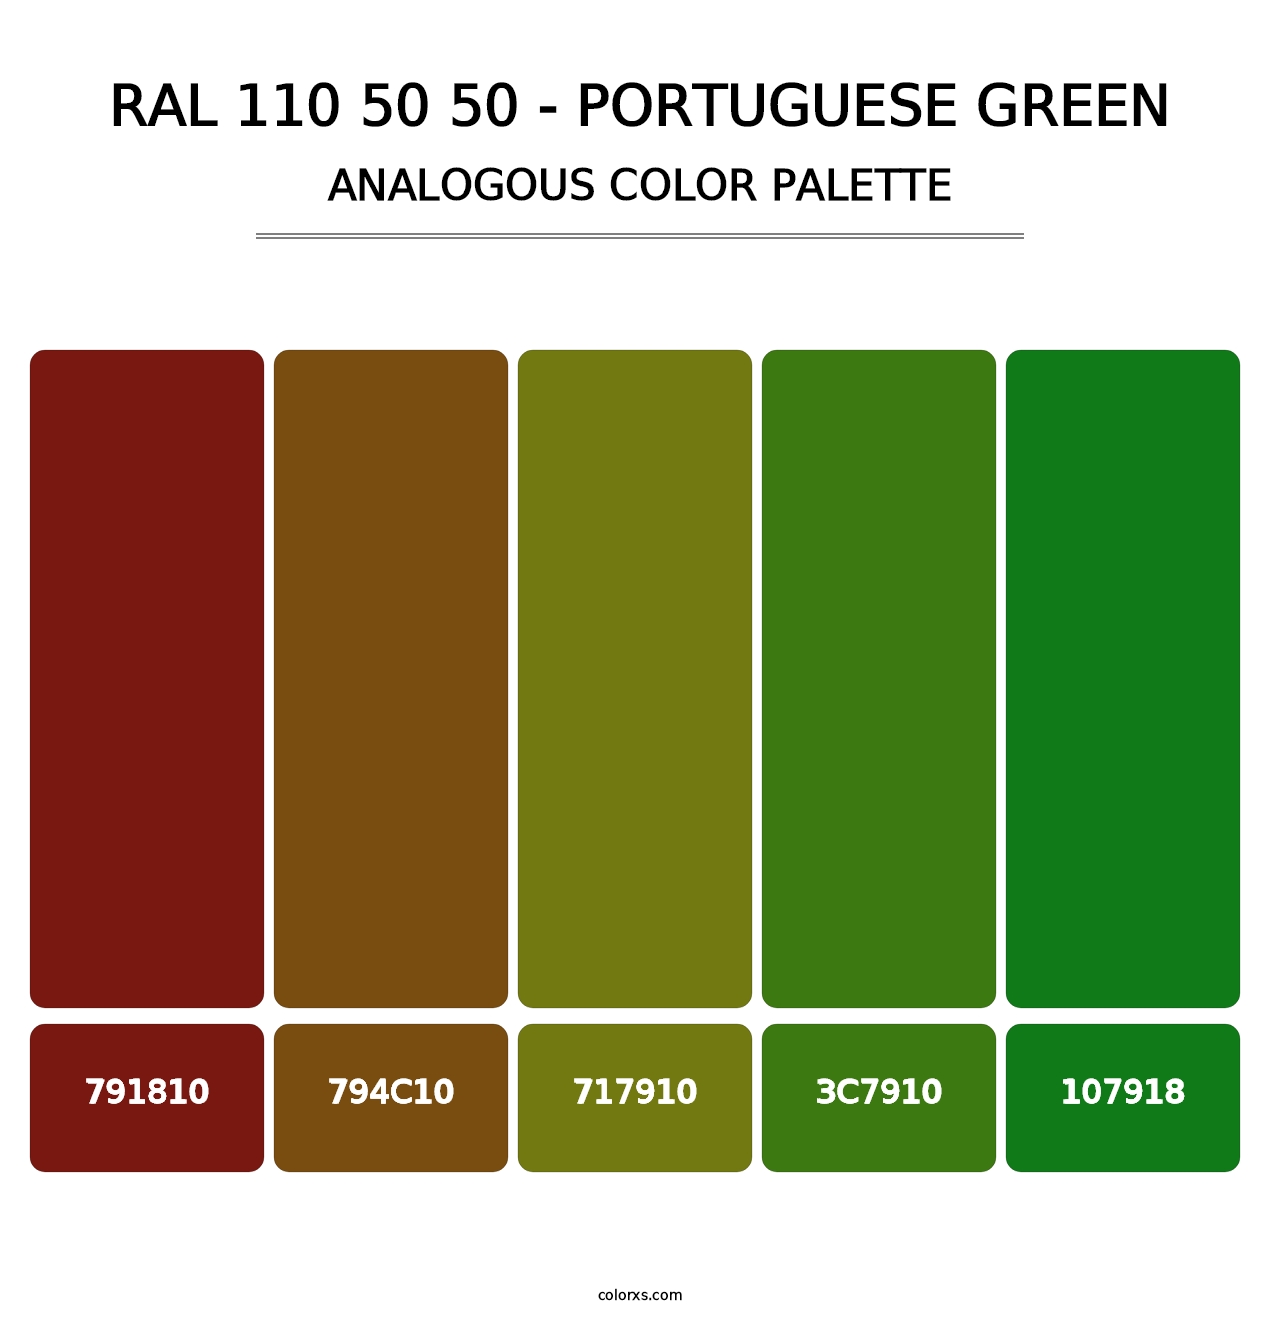 RAL 110 50 50 - Portuguese Green - Analogous Color Palette